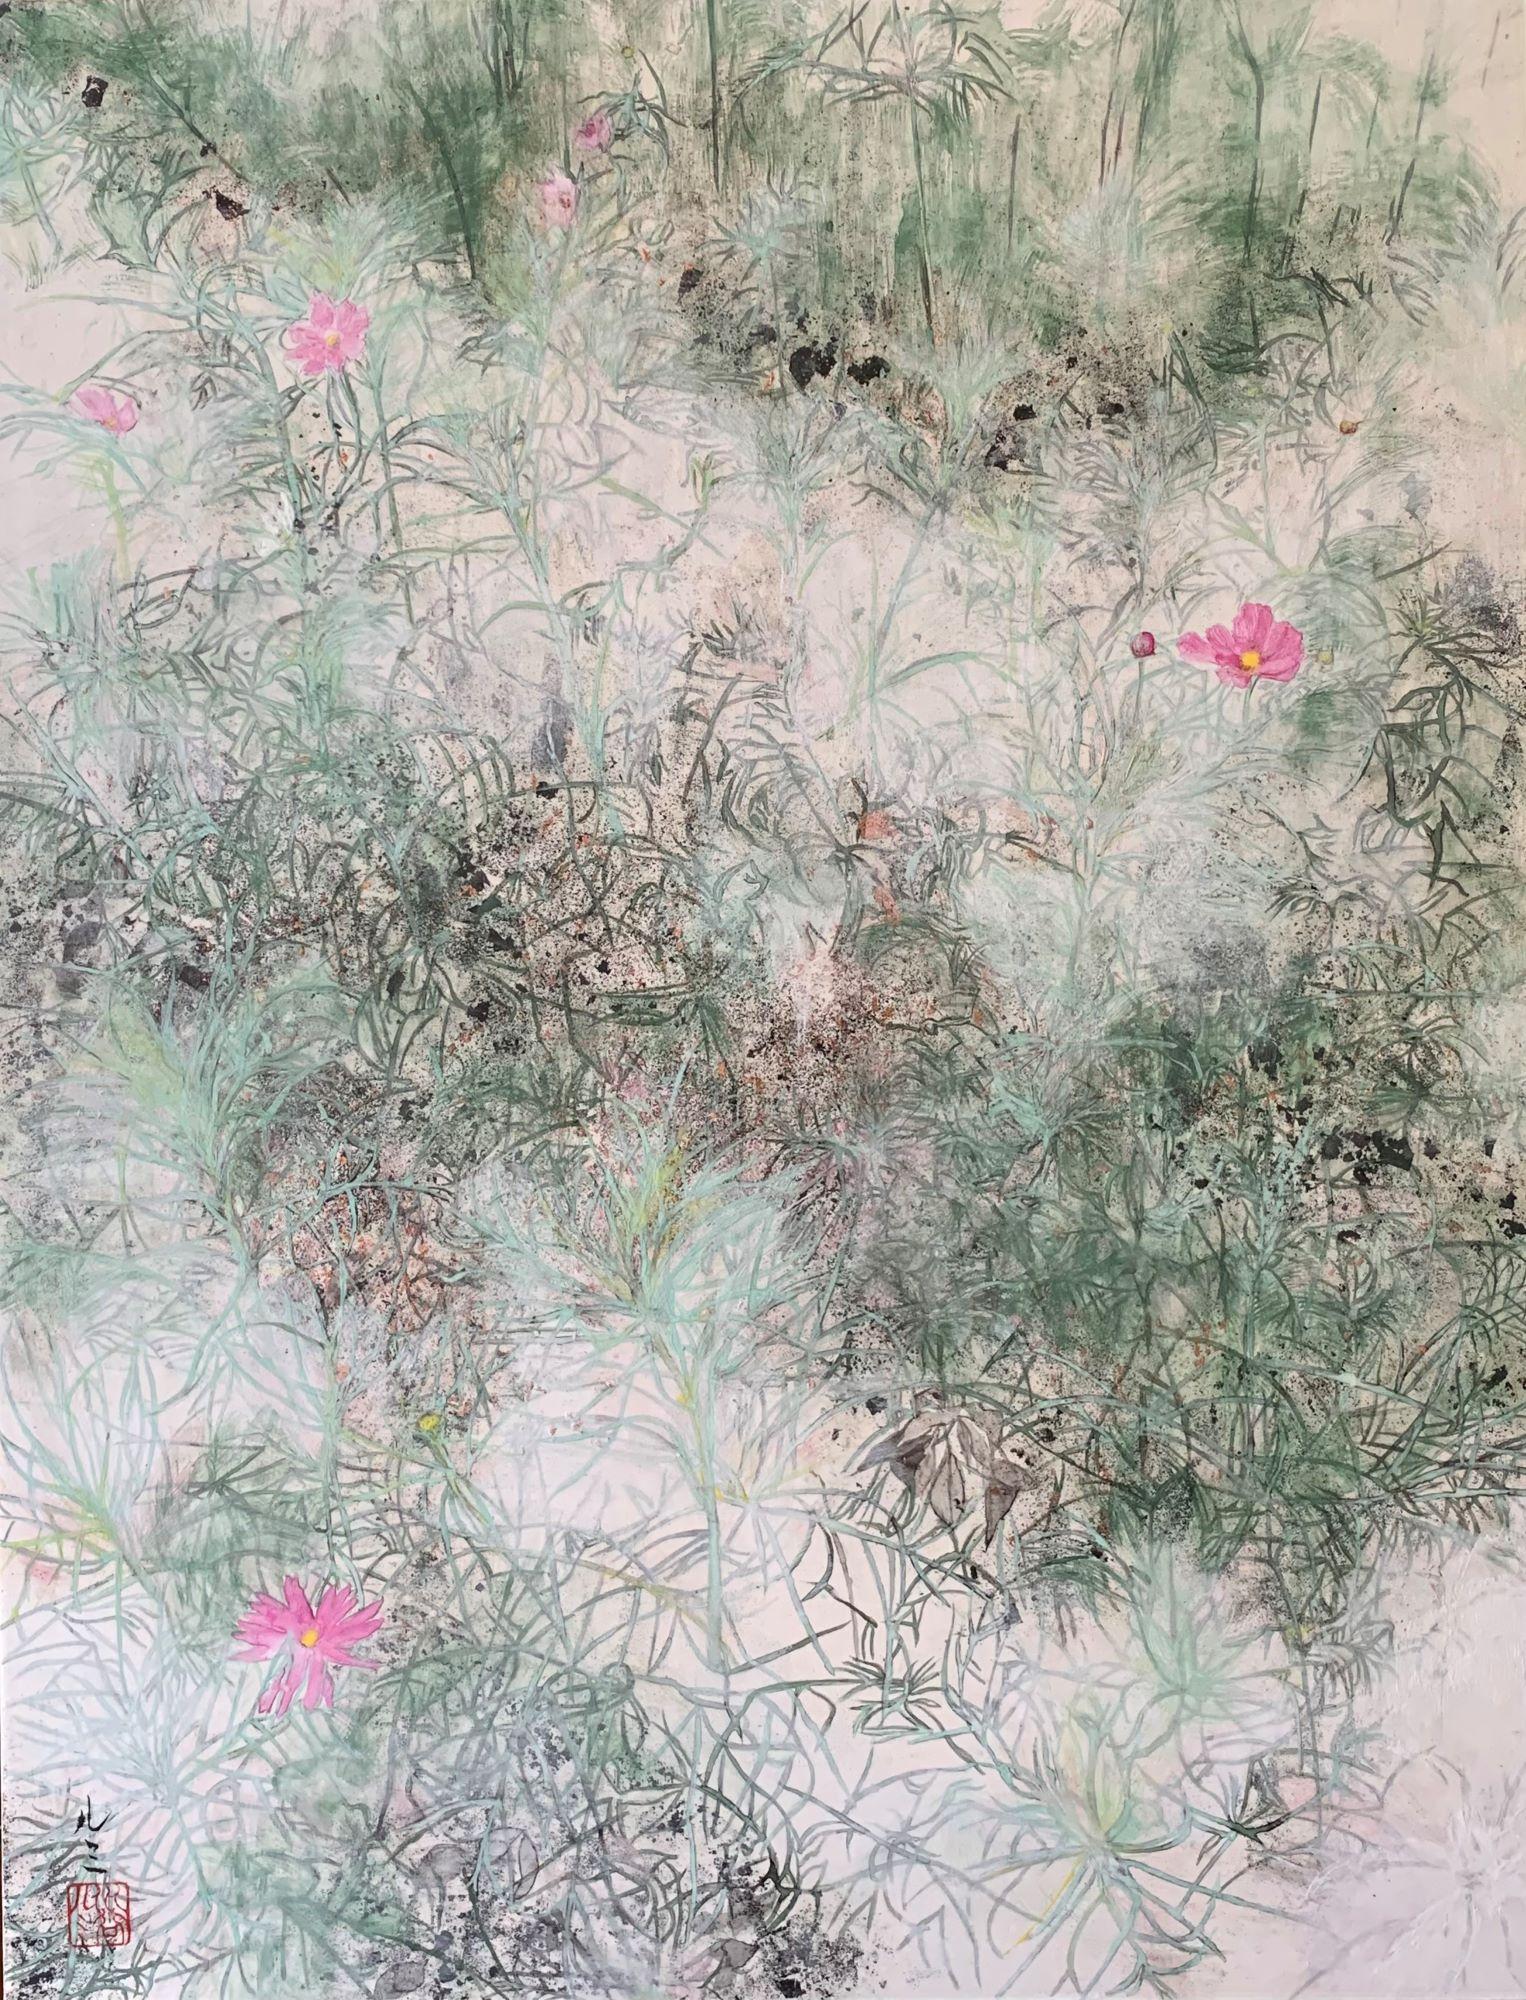 Cosmos II by Lumi Mizutani - Japanese style landscape painting, pink flowers